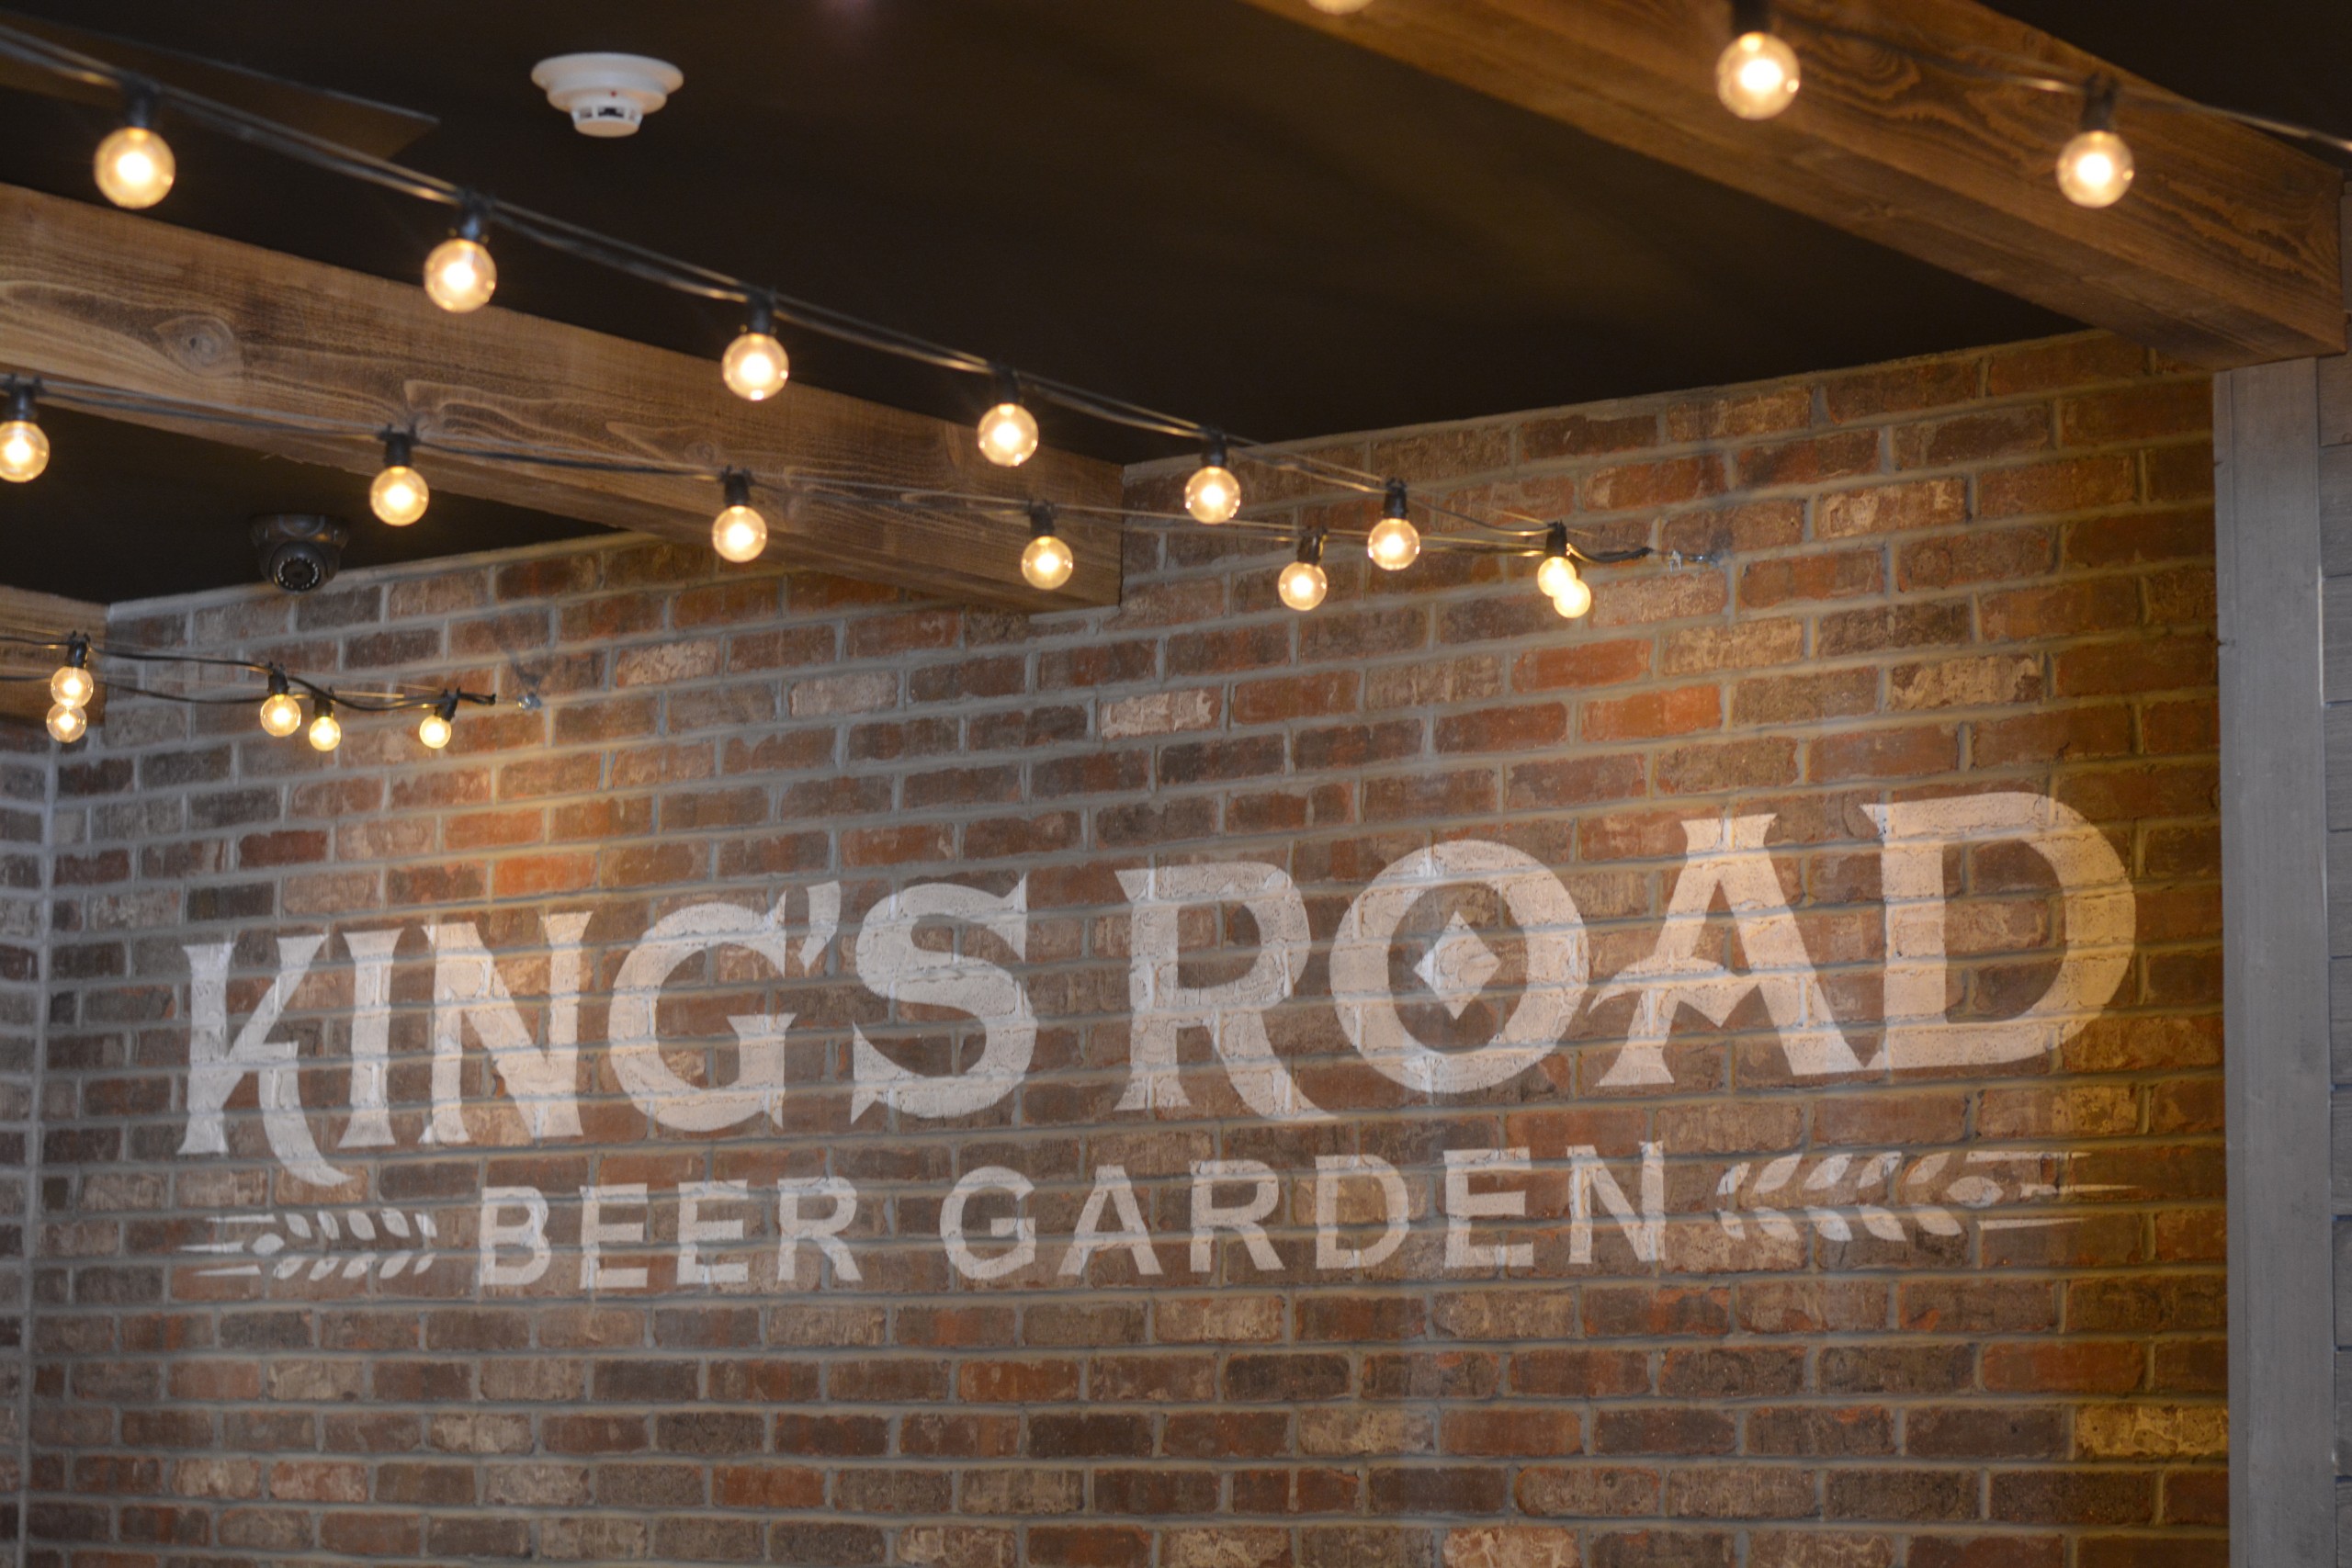 King's Road Brewing - Garden